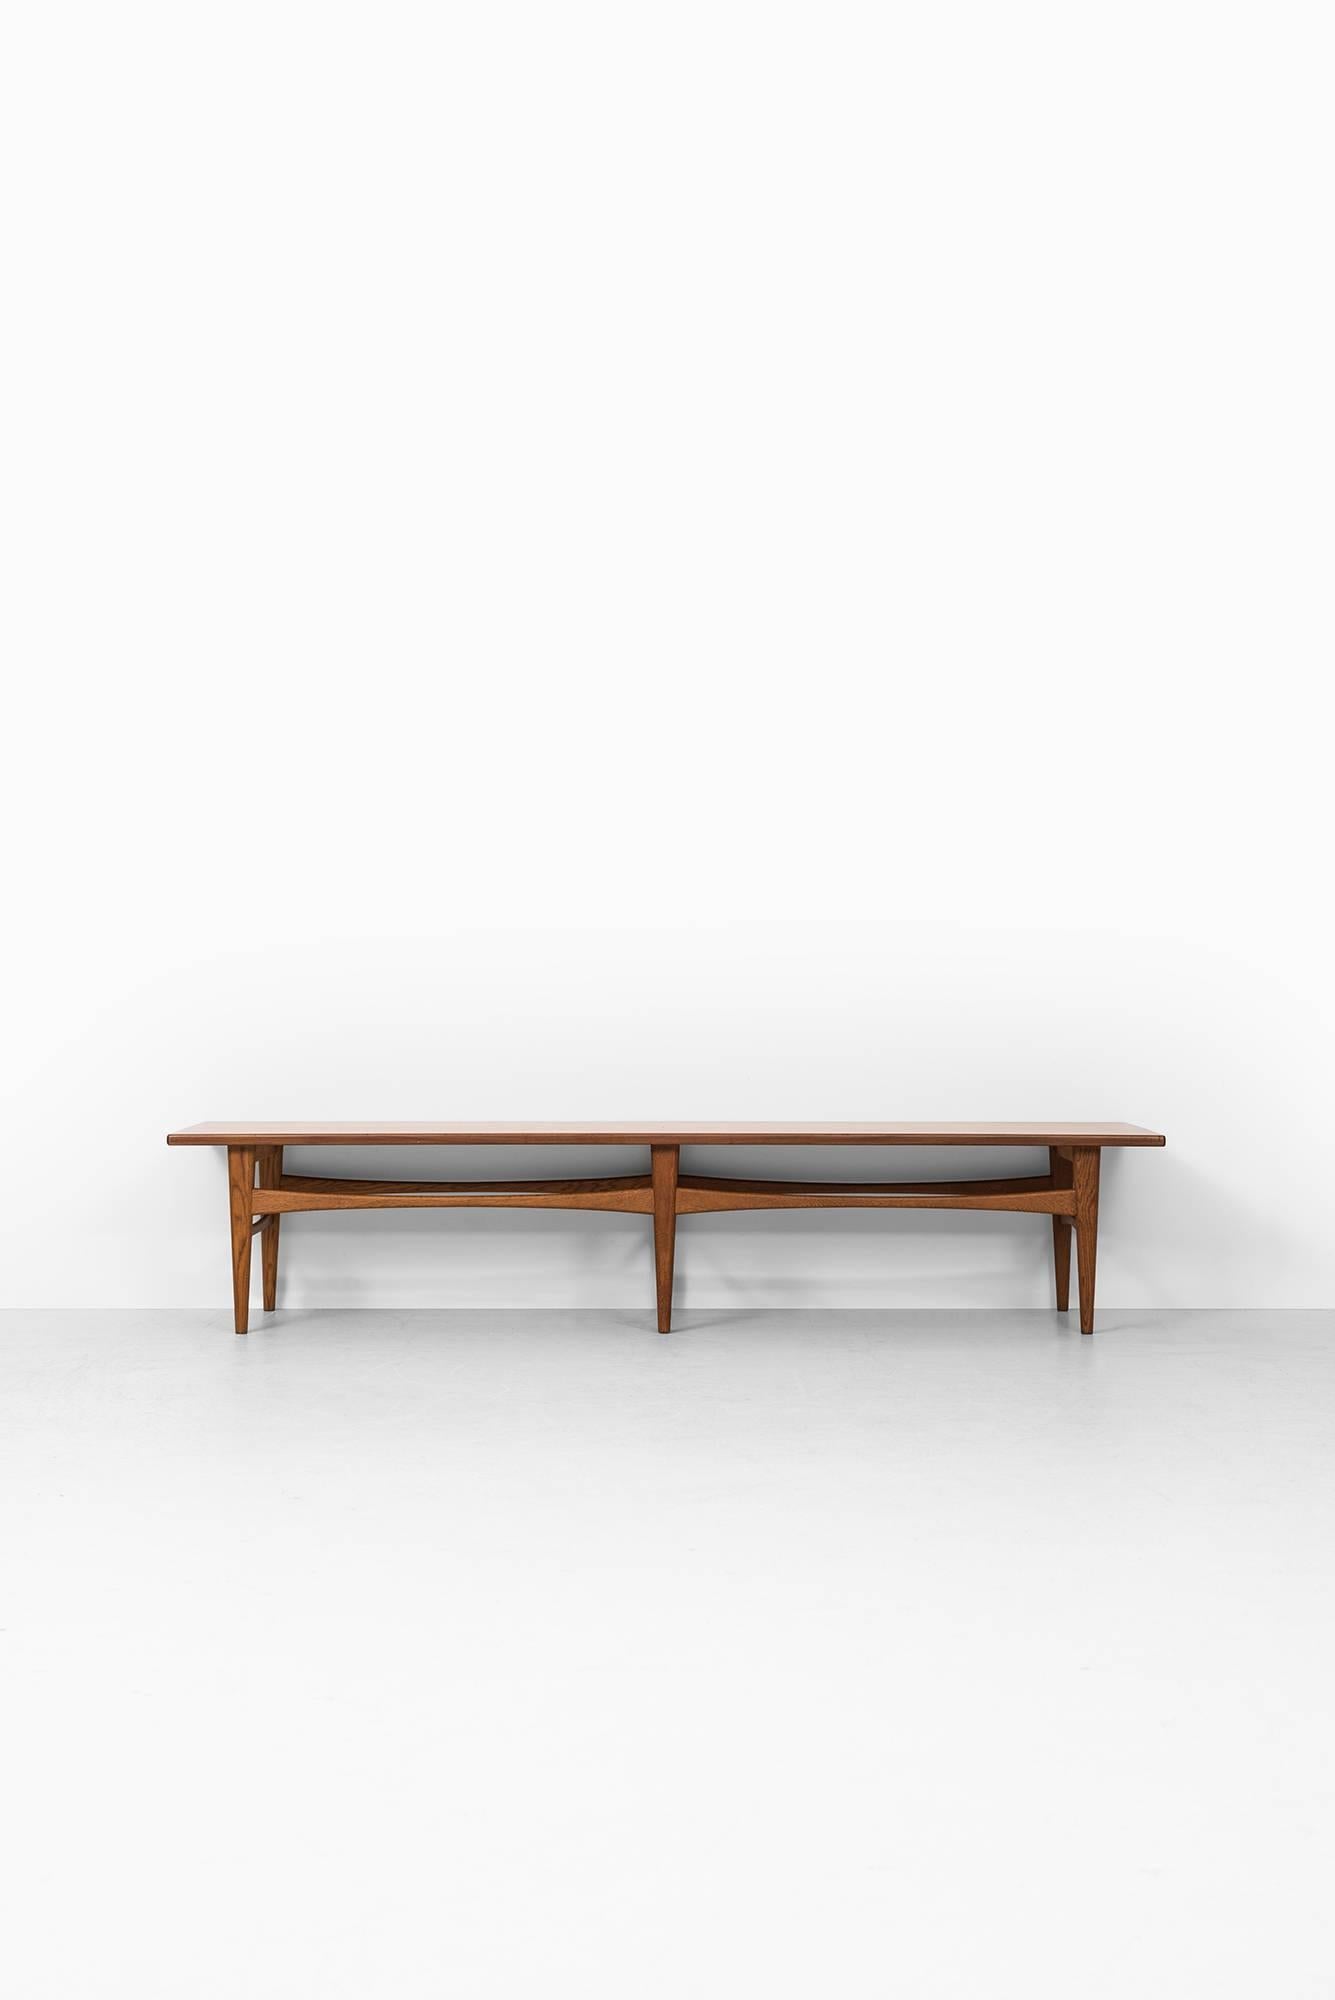 Scandinavian Modern Eric Johansson Bench / Side Table Model TV5 by Abrahamsson Möbelfabrik in Sweden